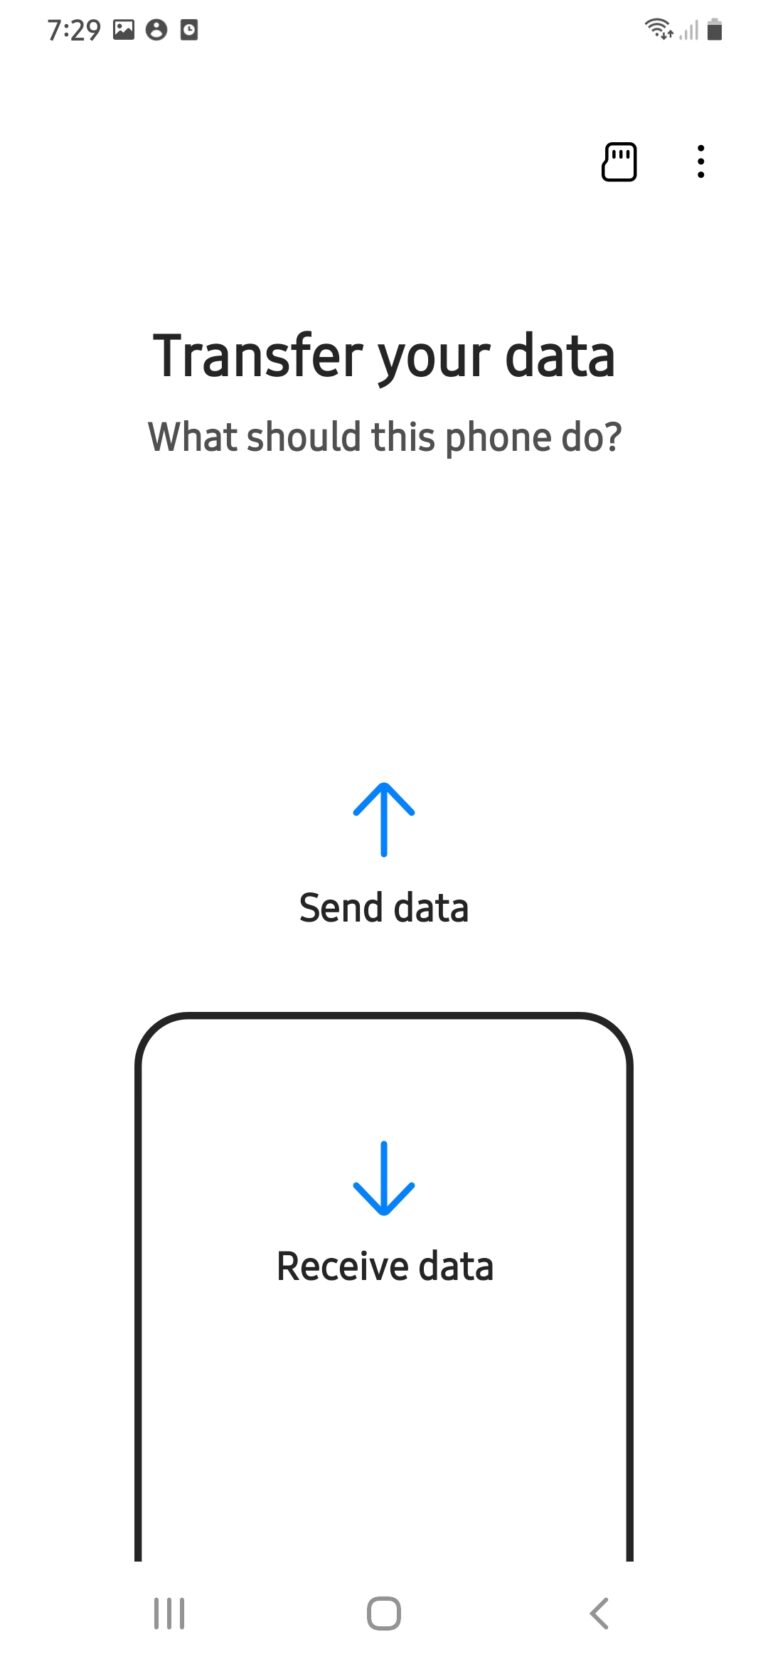 send data or receive data